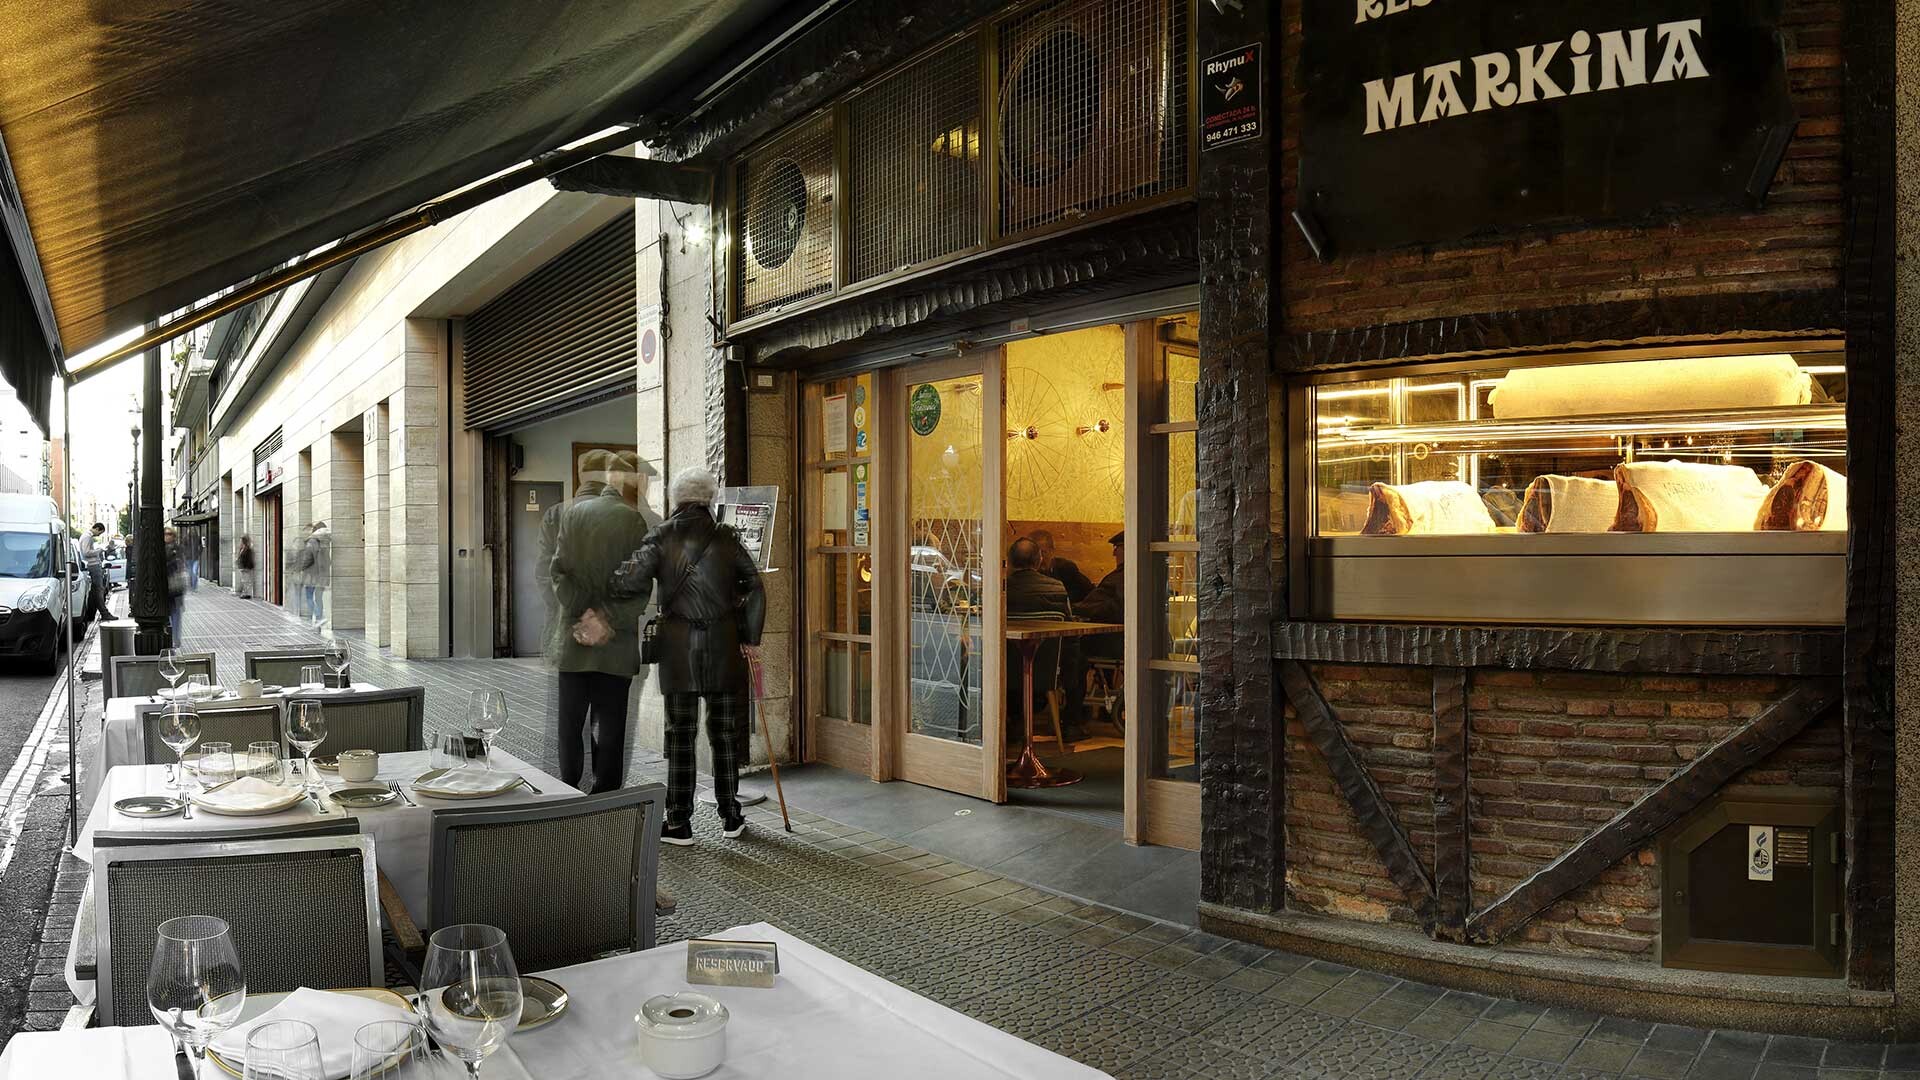 /uploads/image/399252603_terraza-restaurante-markina-2_lg.jpg